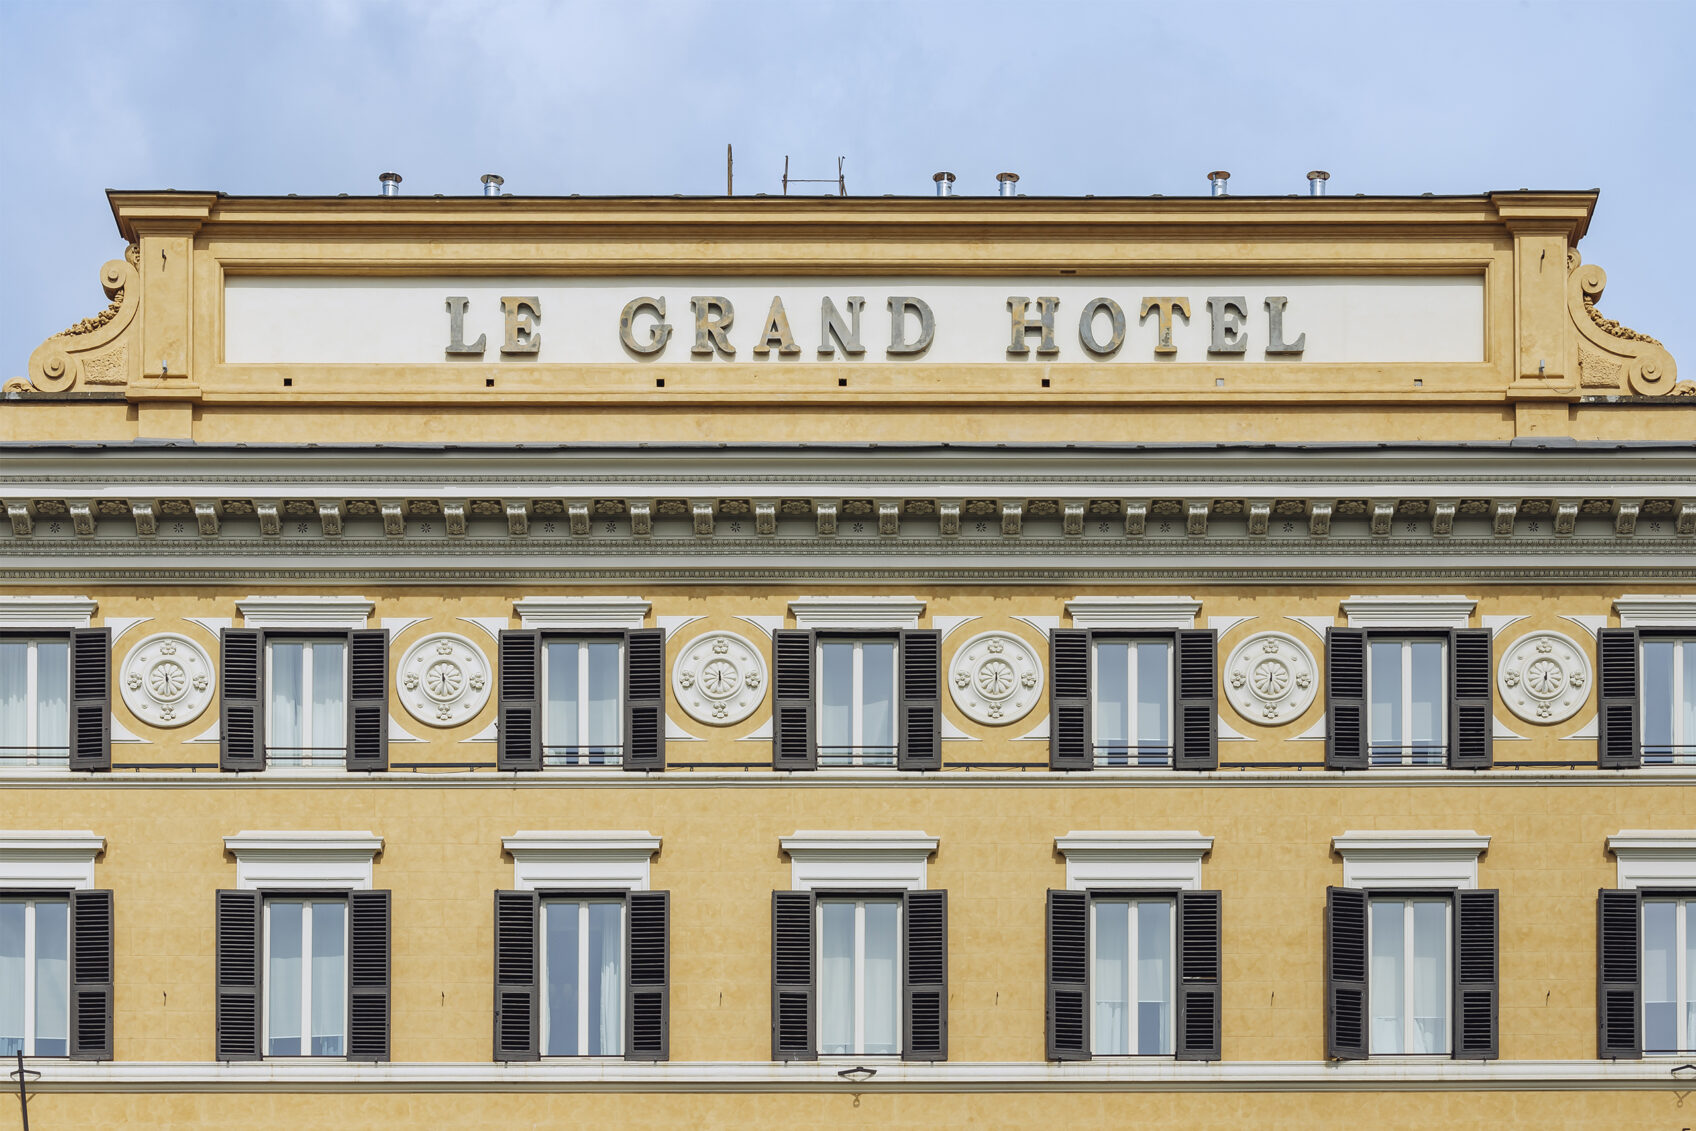 Rome St. Regis Hotel facade detail